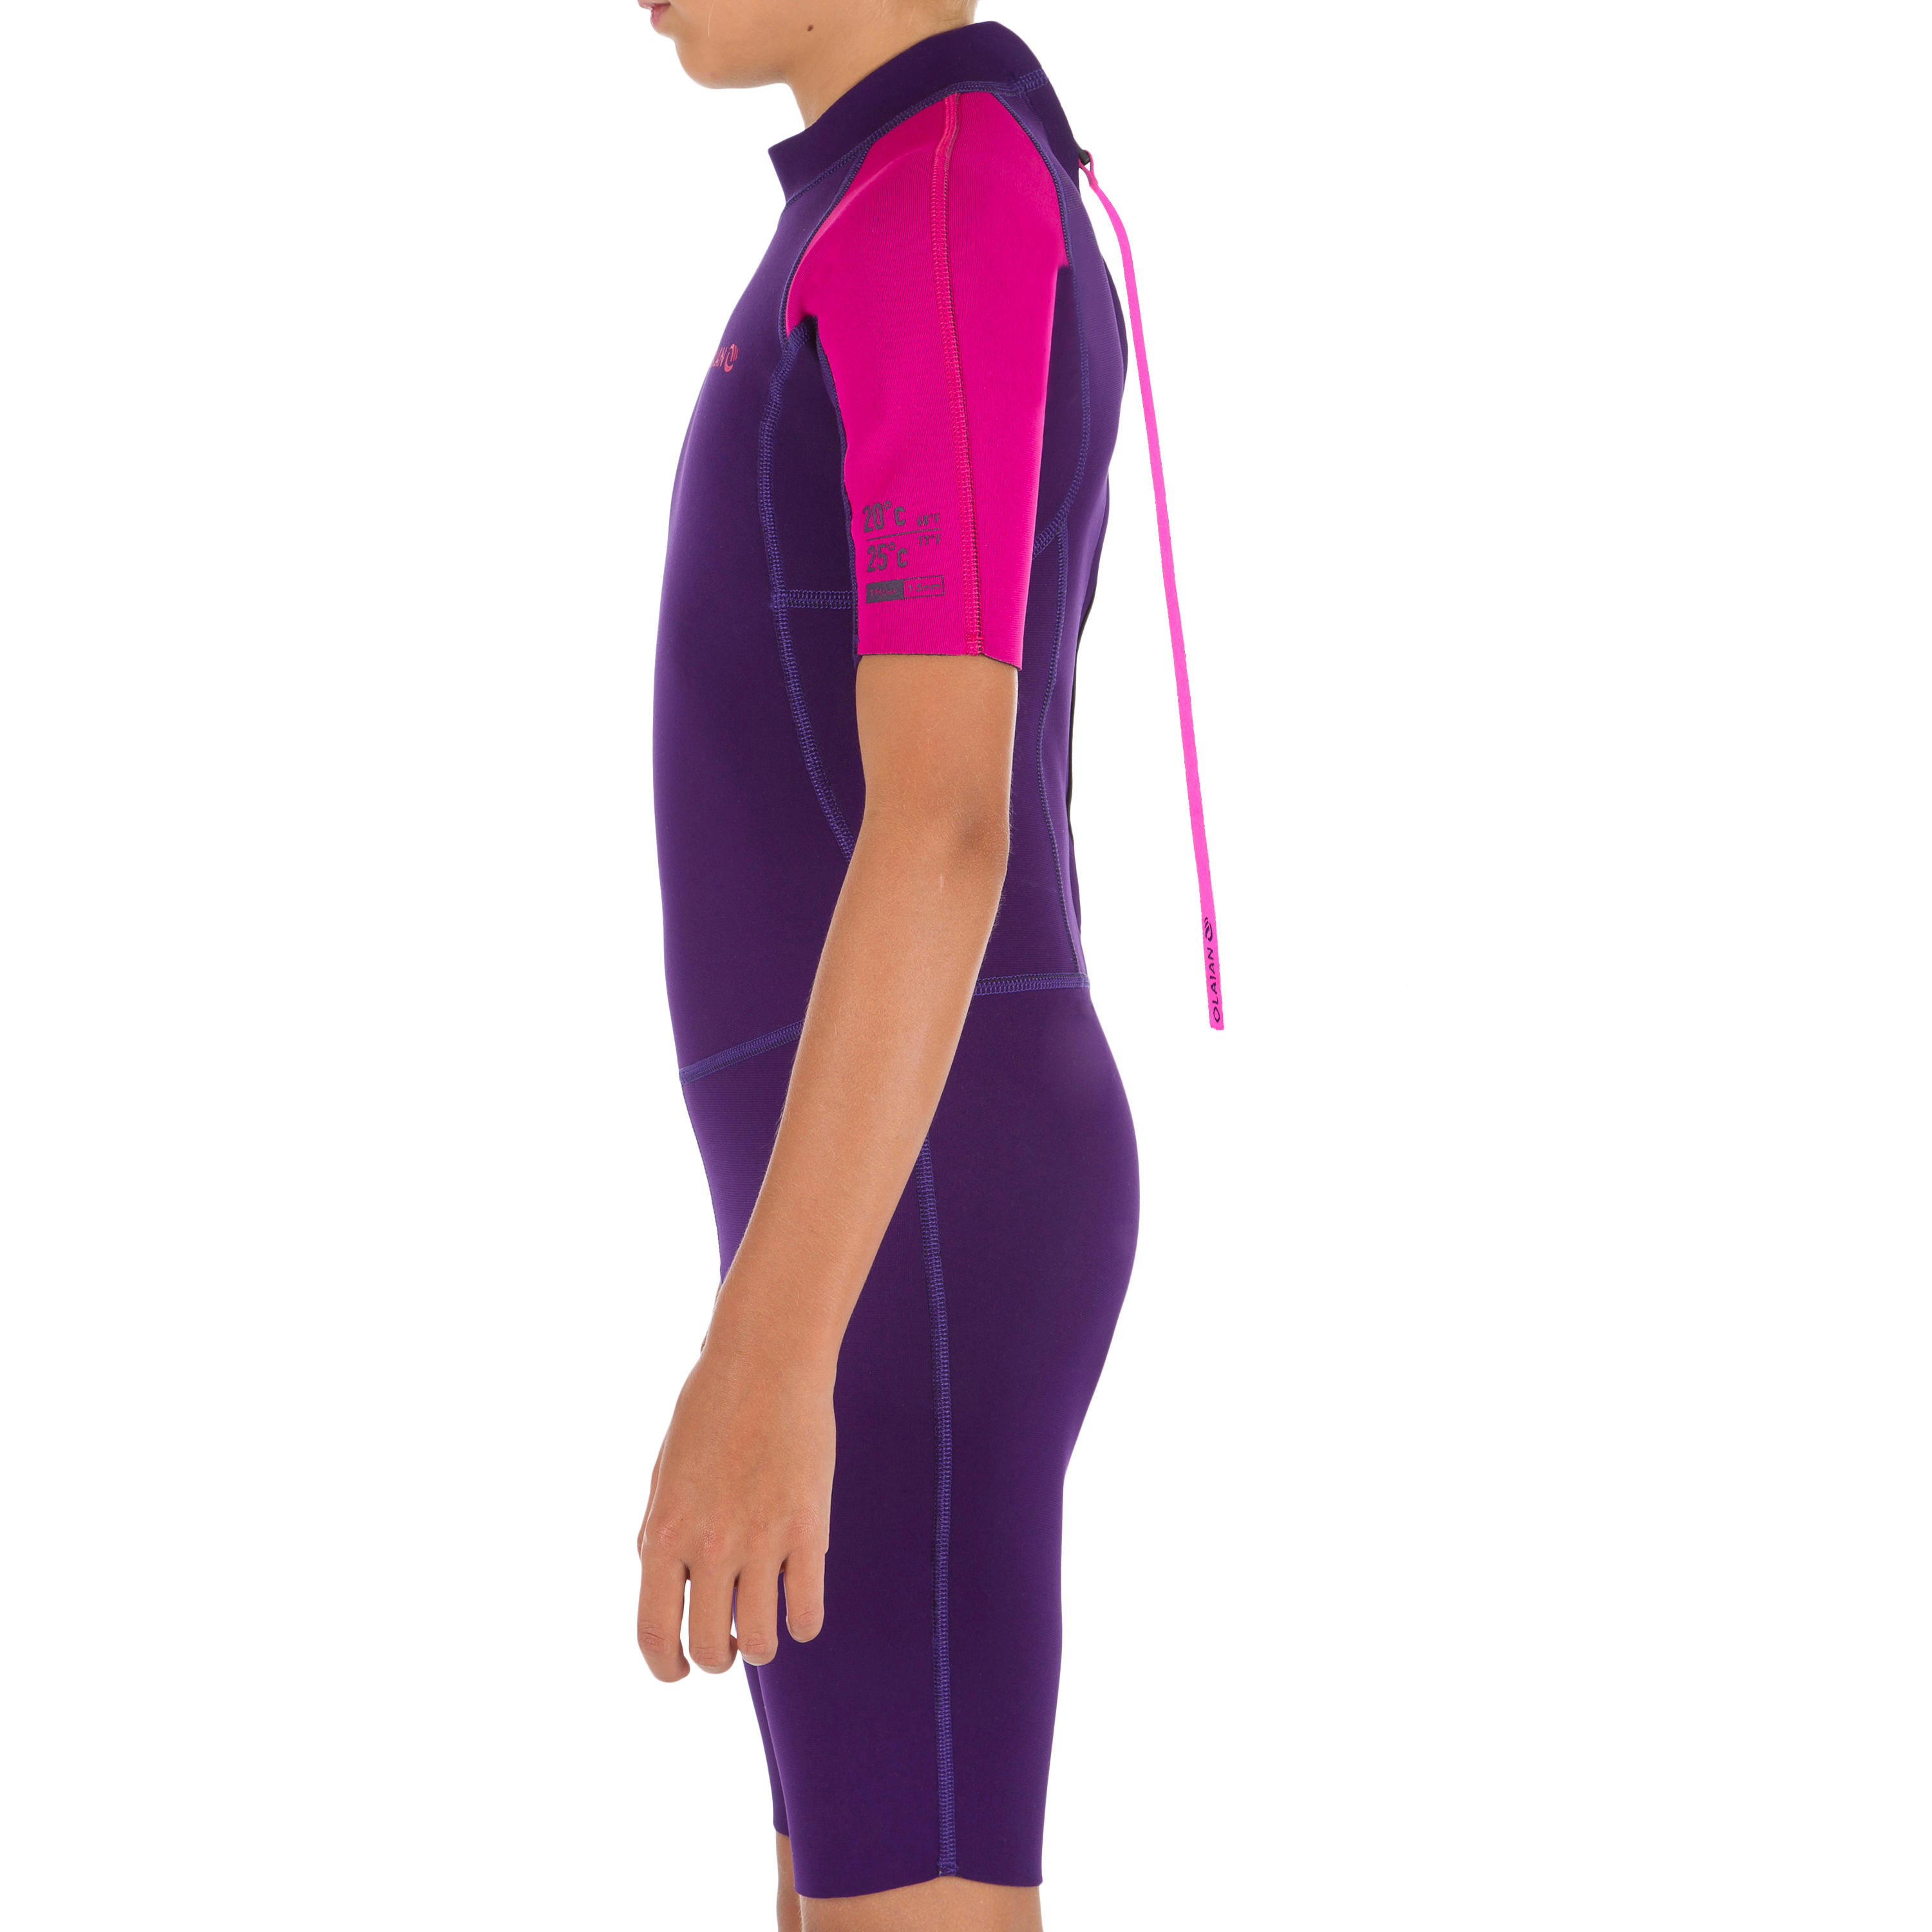 Kids' Neoprene Wetsuit - Shorty 100 - Deep purple, Fuchsia